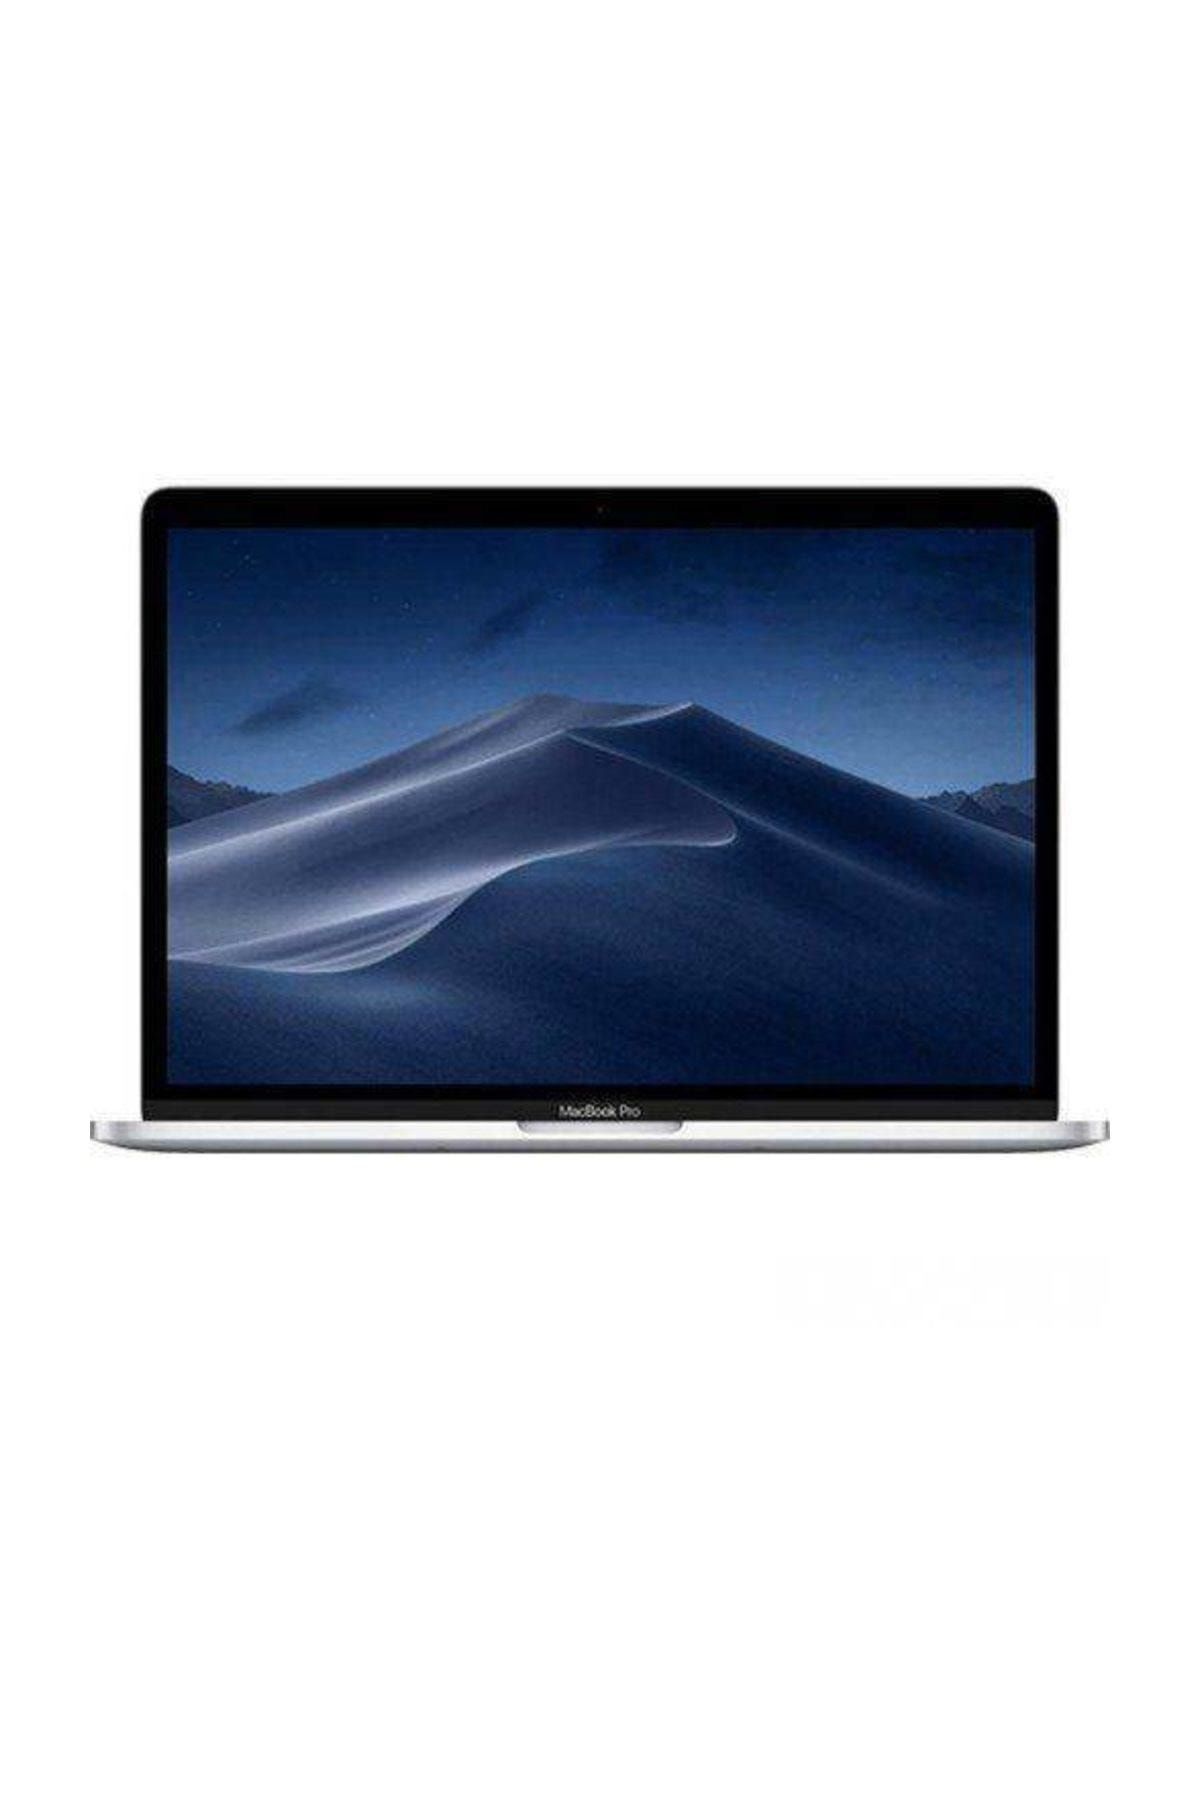 Apple MacBook Pro Intel Core i7 9750H 16GB 256GB SSD Radeon Pro 555X macOS 15" FHD MV902TU/A